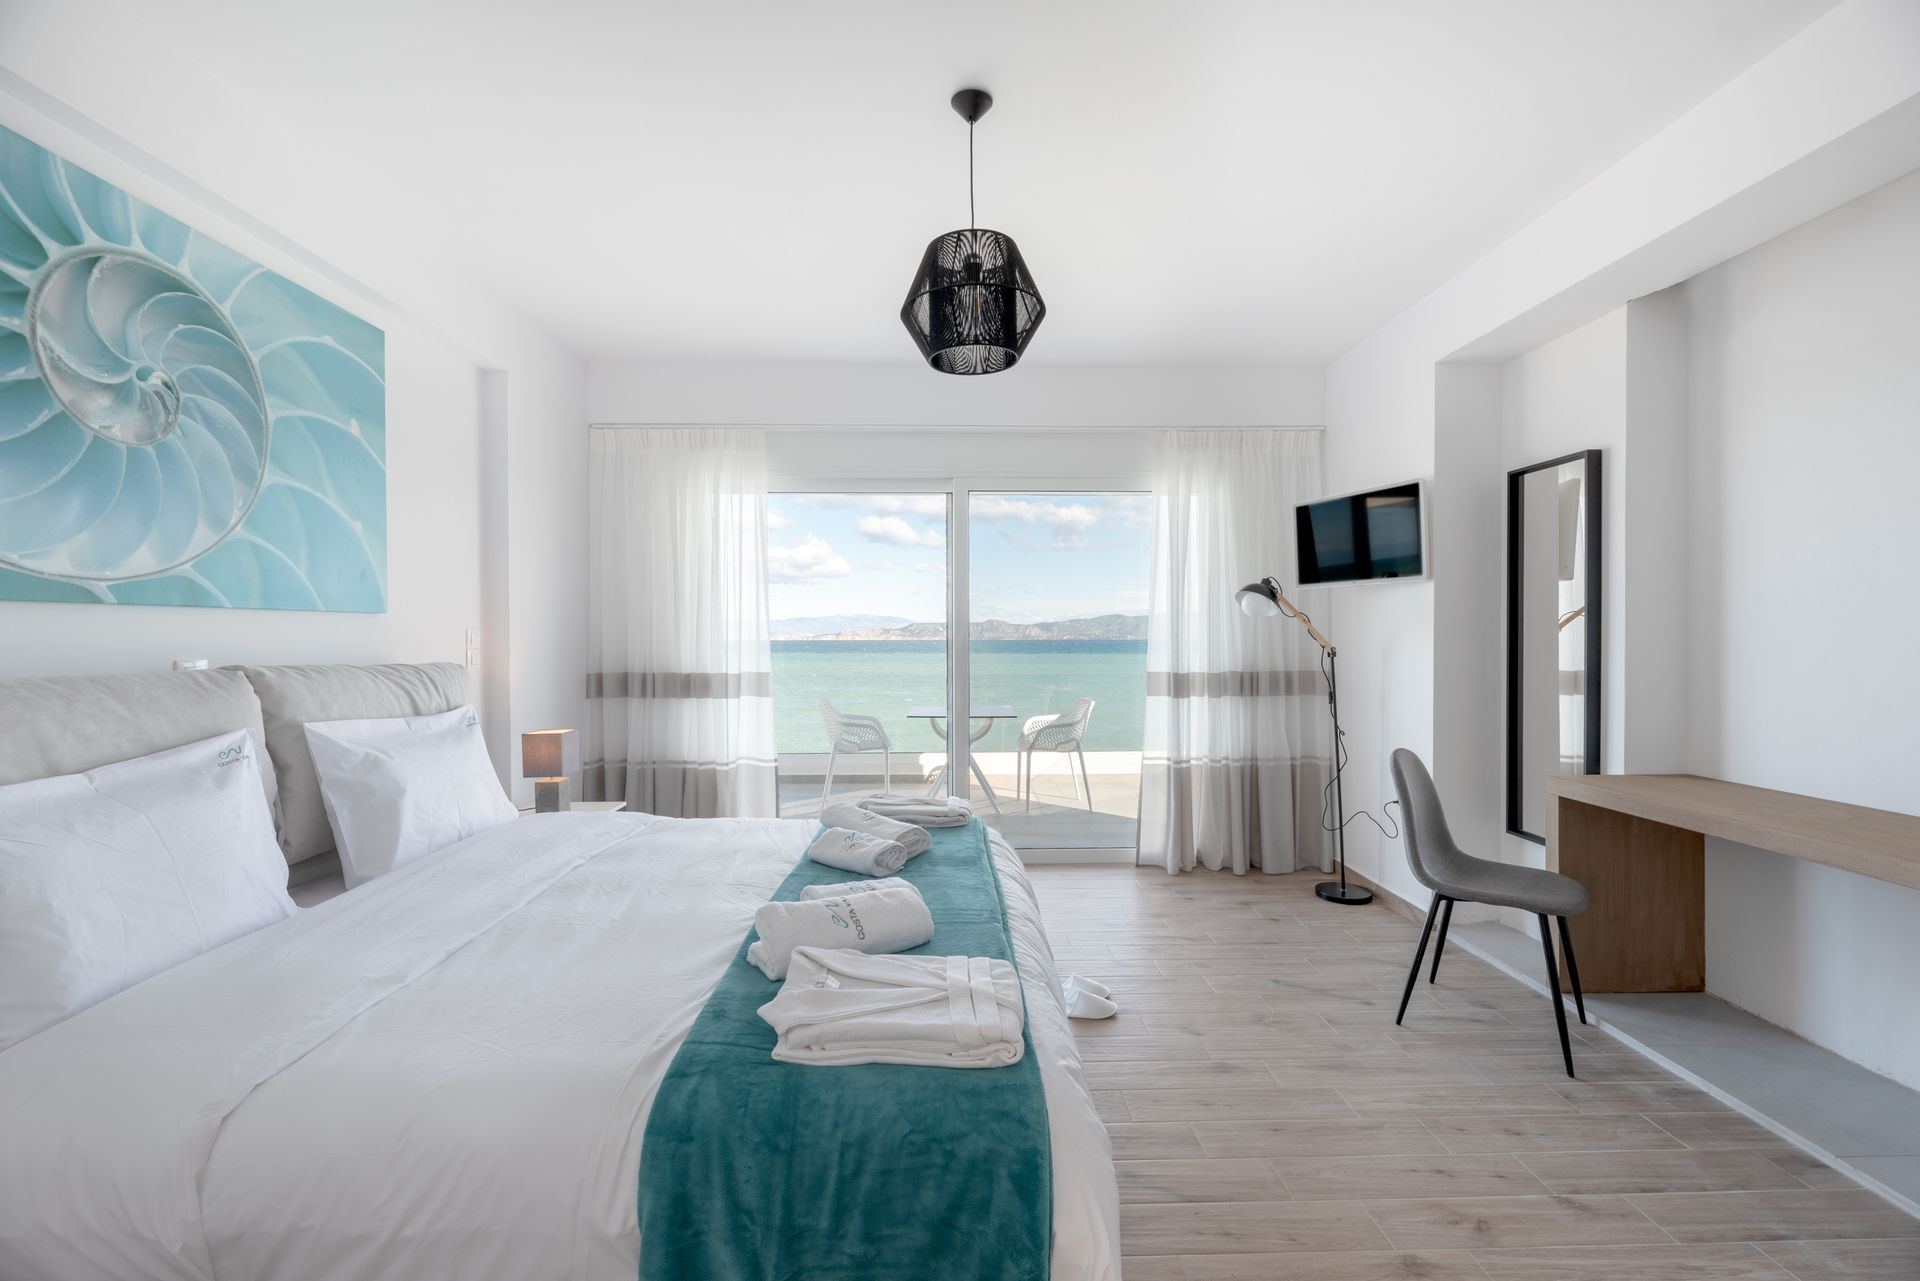 Costa Vasia Suites & Apartments - Βραχάτι Κορινθίας ✦ 2 Ημέρες (1 Διανυκτέρευση) ✦ 4 άτομα ✦ 1 ✦ έως 30/11/2024 ✦ Κοντά σε Παραλία!